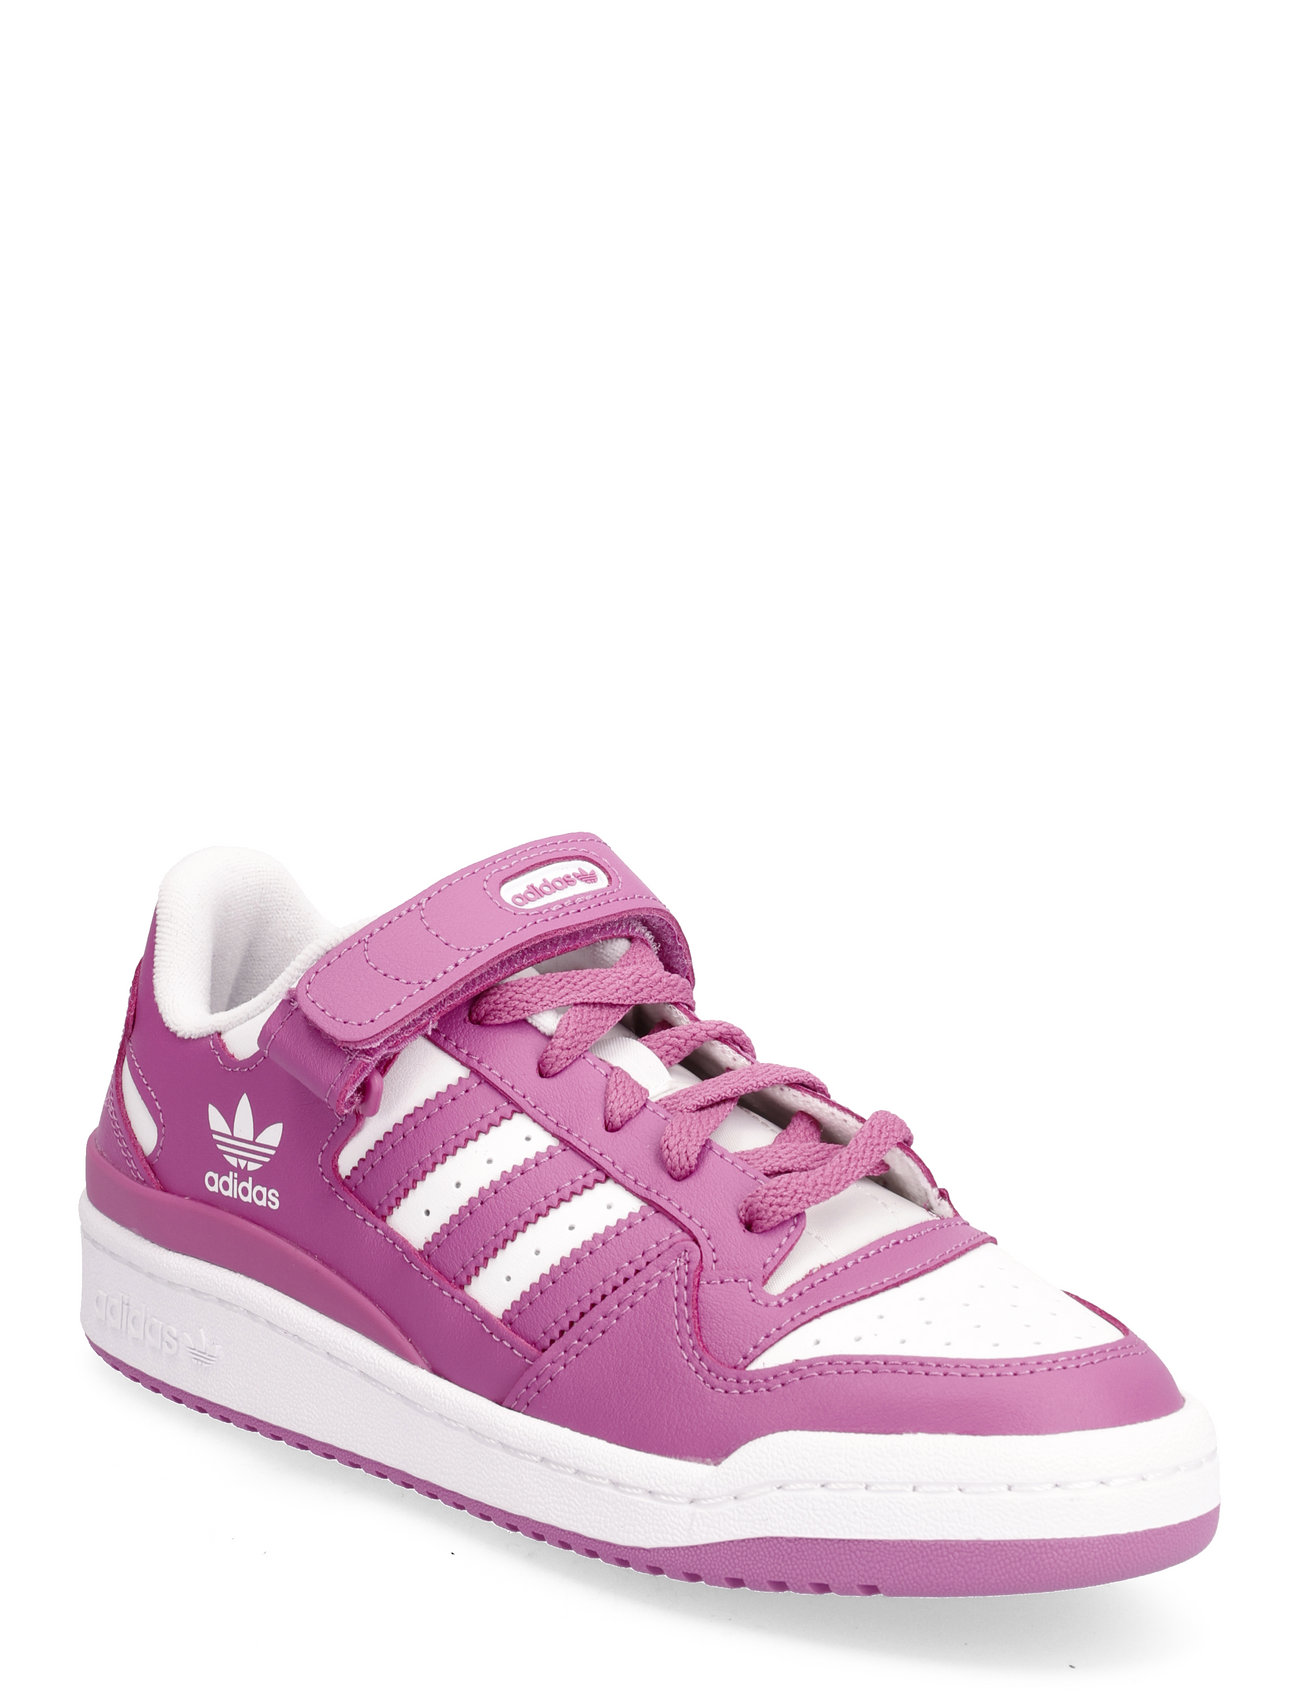 "adidas Originals" "Forum Low Shoes Sport Sneakers Low-top Pink Adidas